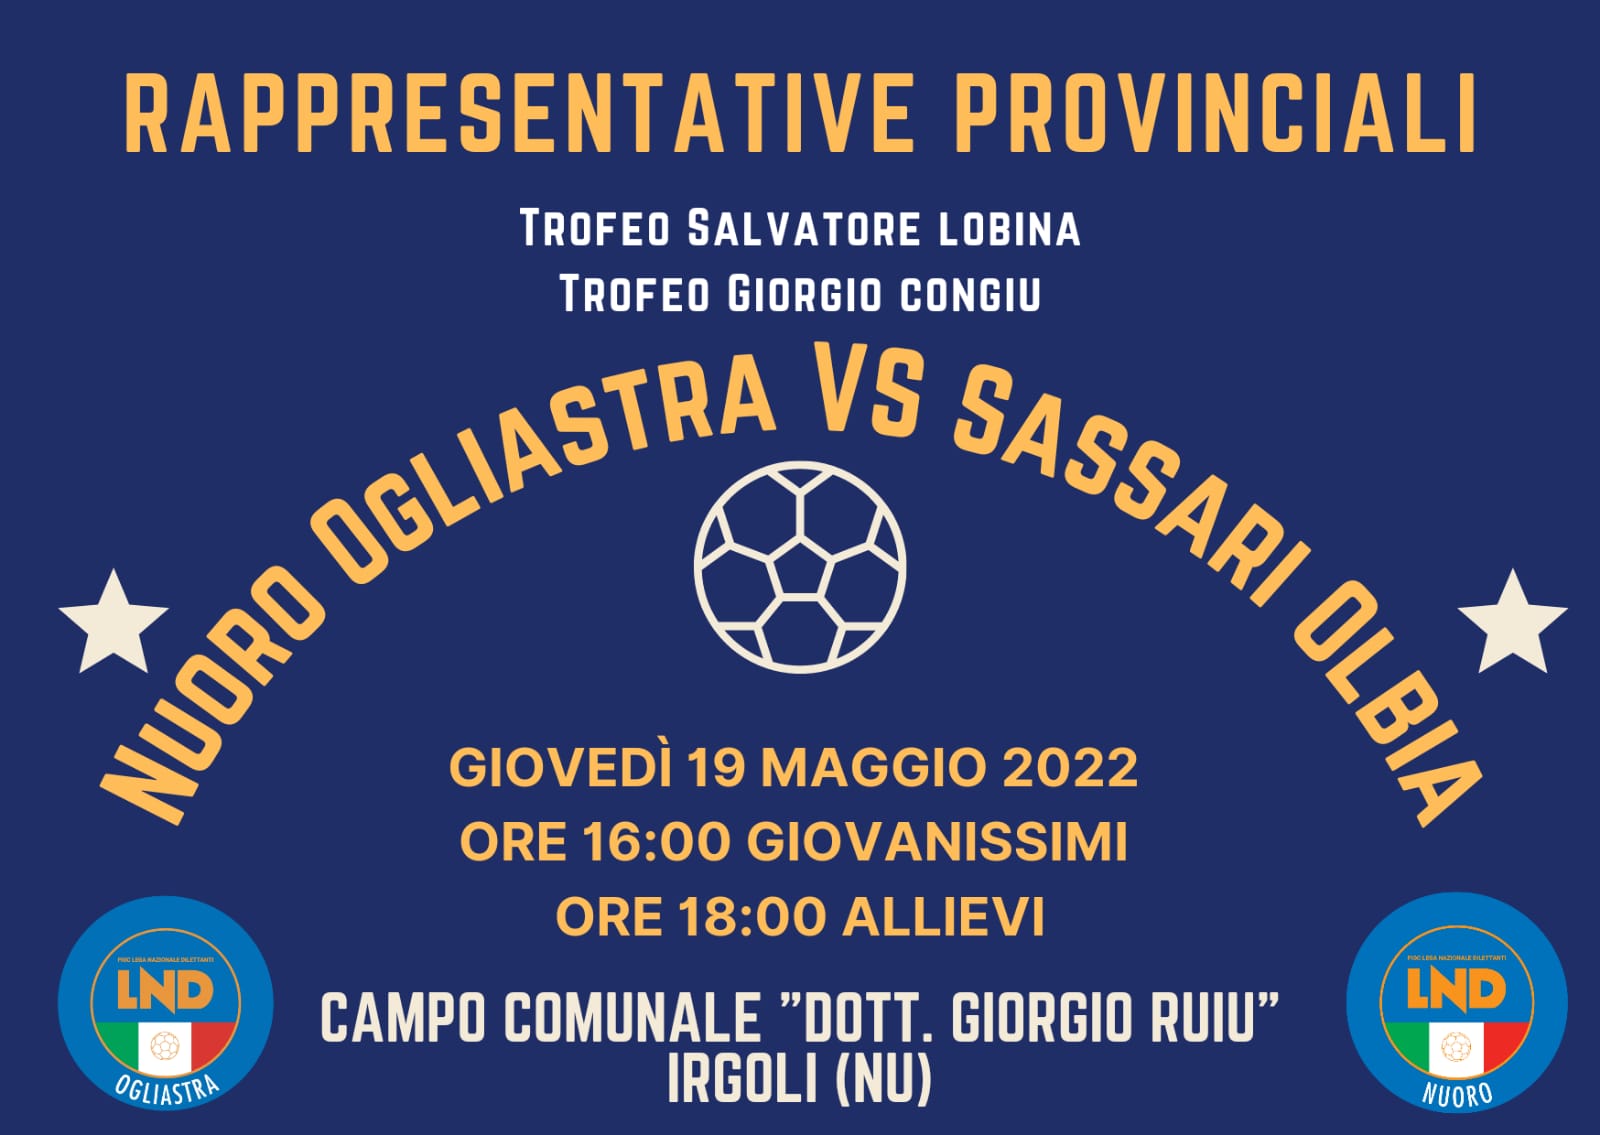 Nuoro/Ogliastra VS Sassari/Olbia: al via le Rappresentative F.I.G.C.